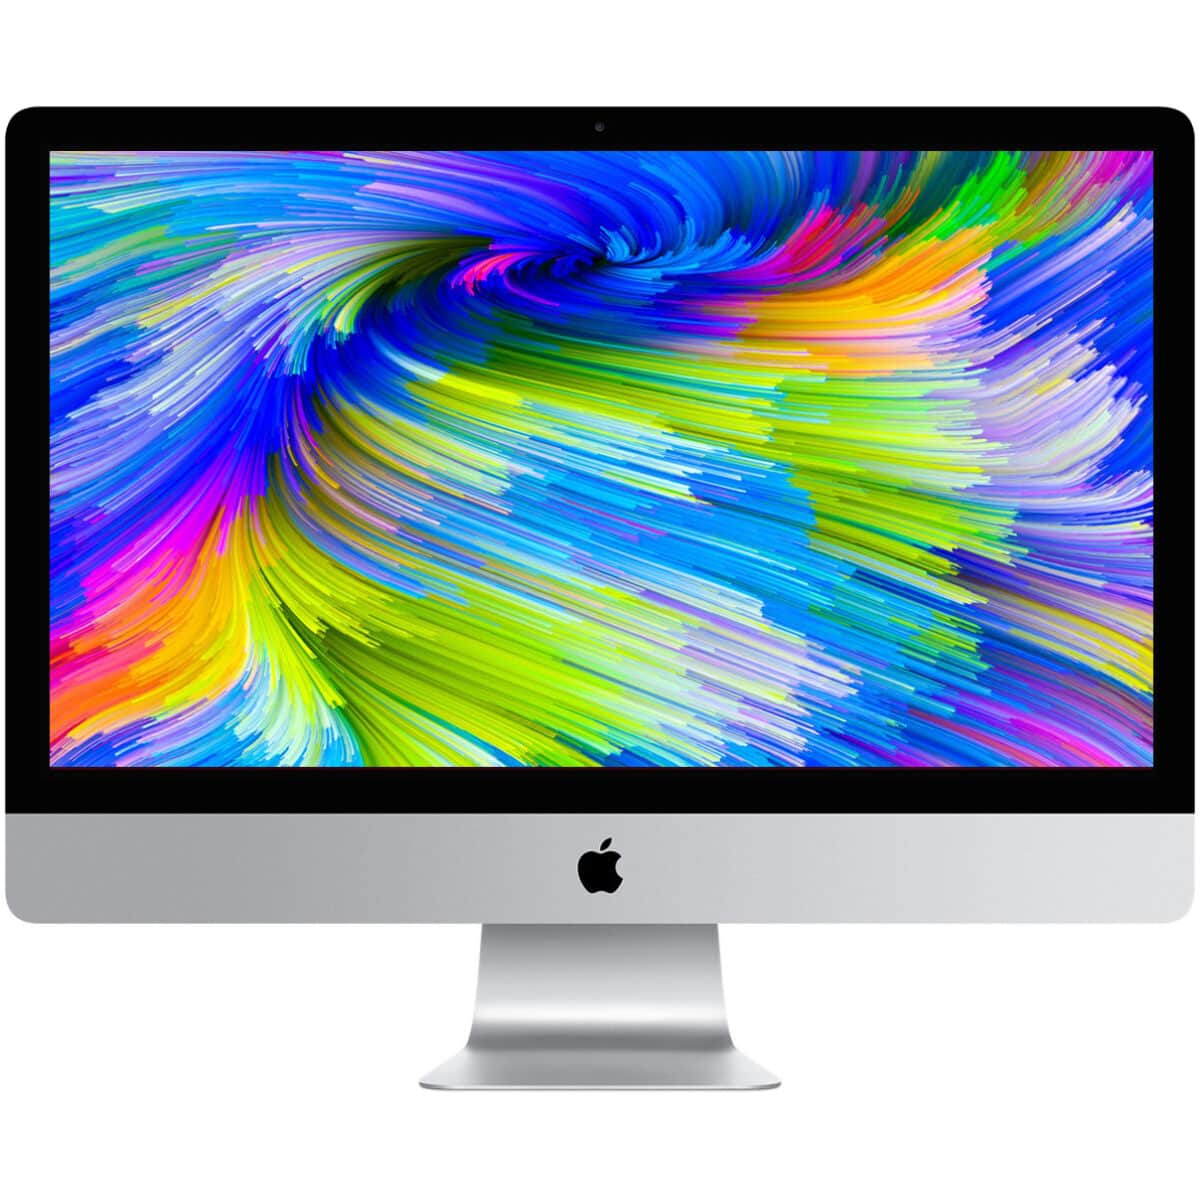 IMac 21.5" Slim Apple Core i5 512GB SSD 8GB RAM Powerful Mac OS Big Sur Refurbished Sale